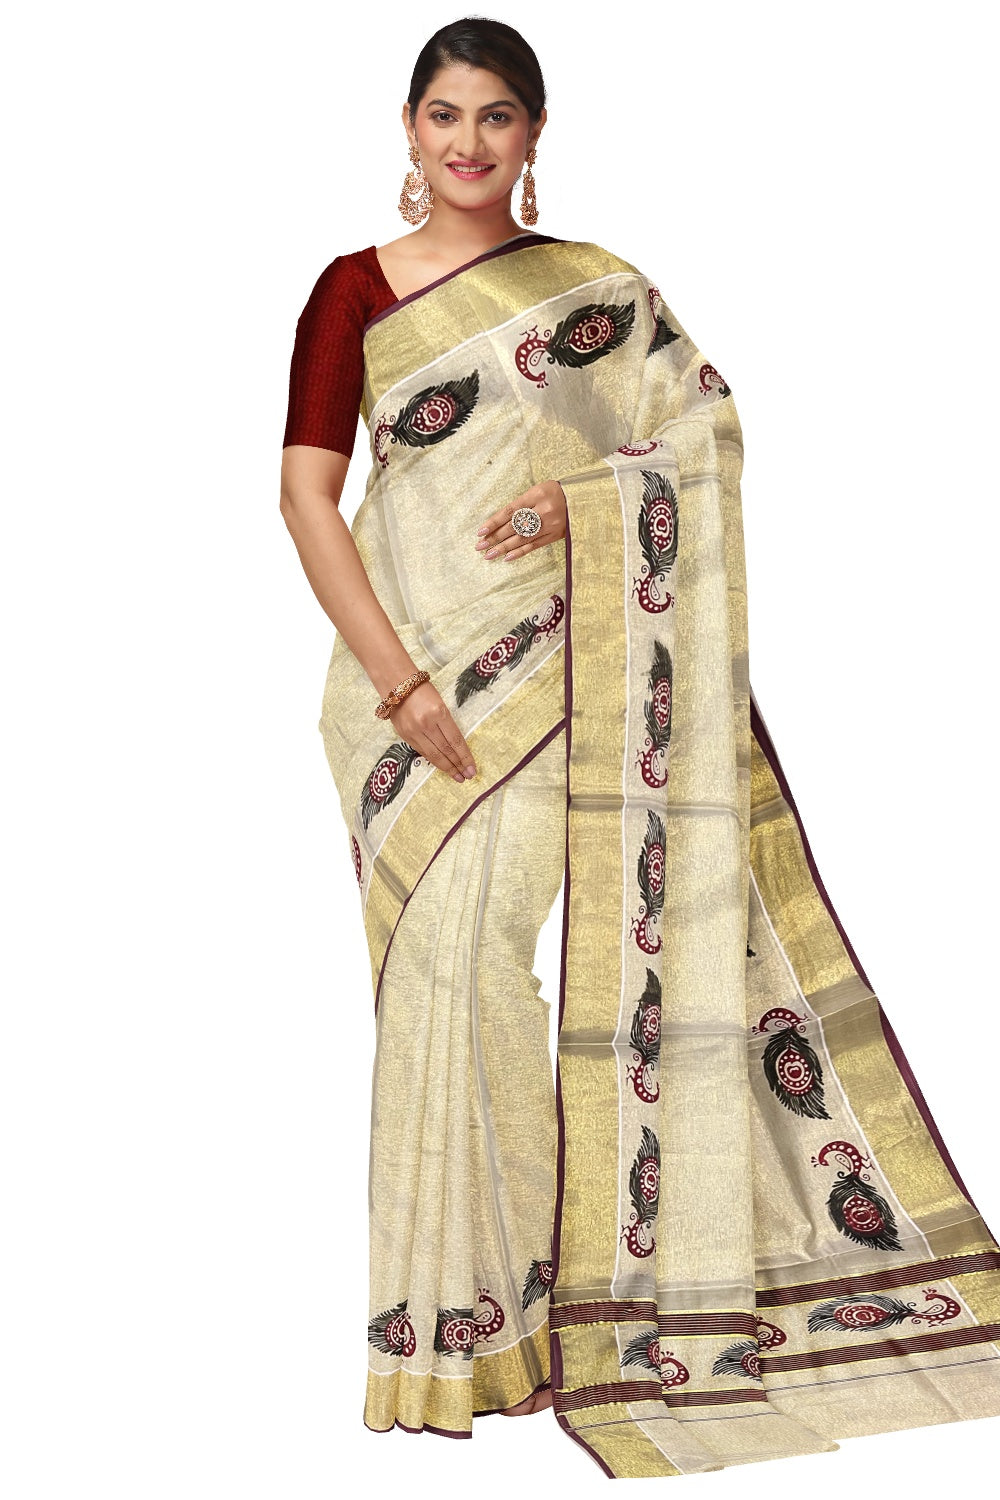 Kerala Tissue Saree with Maroon and Black Peacock Block Printed Design